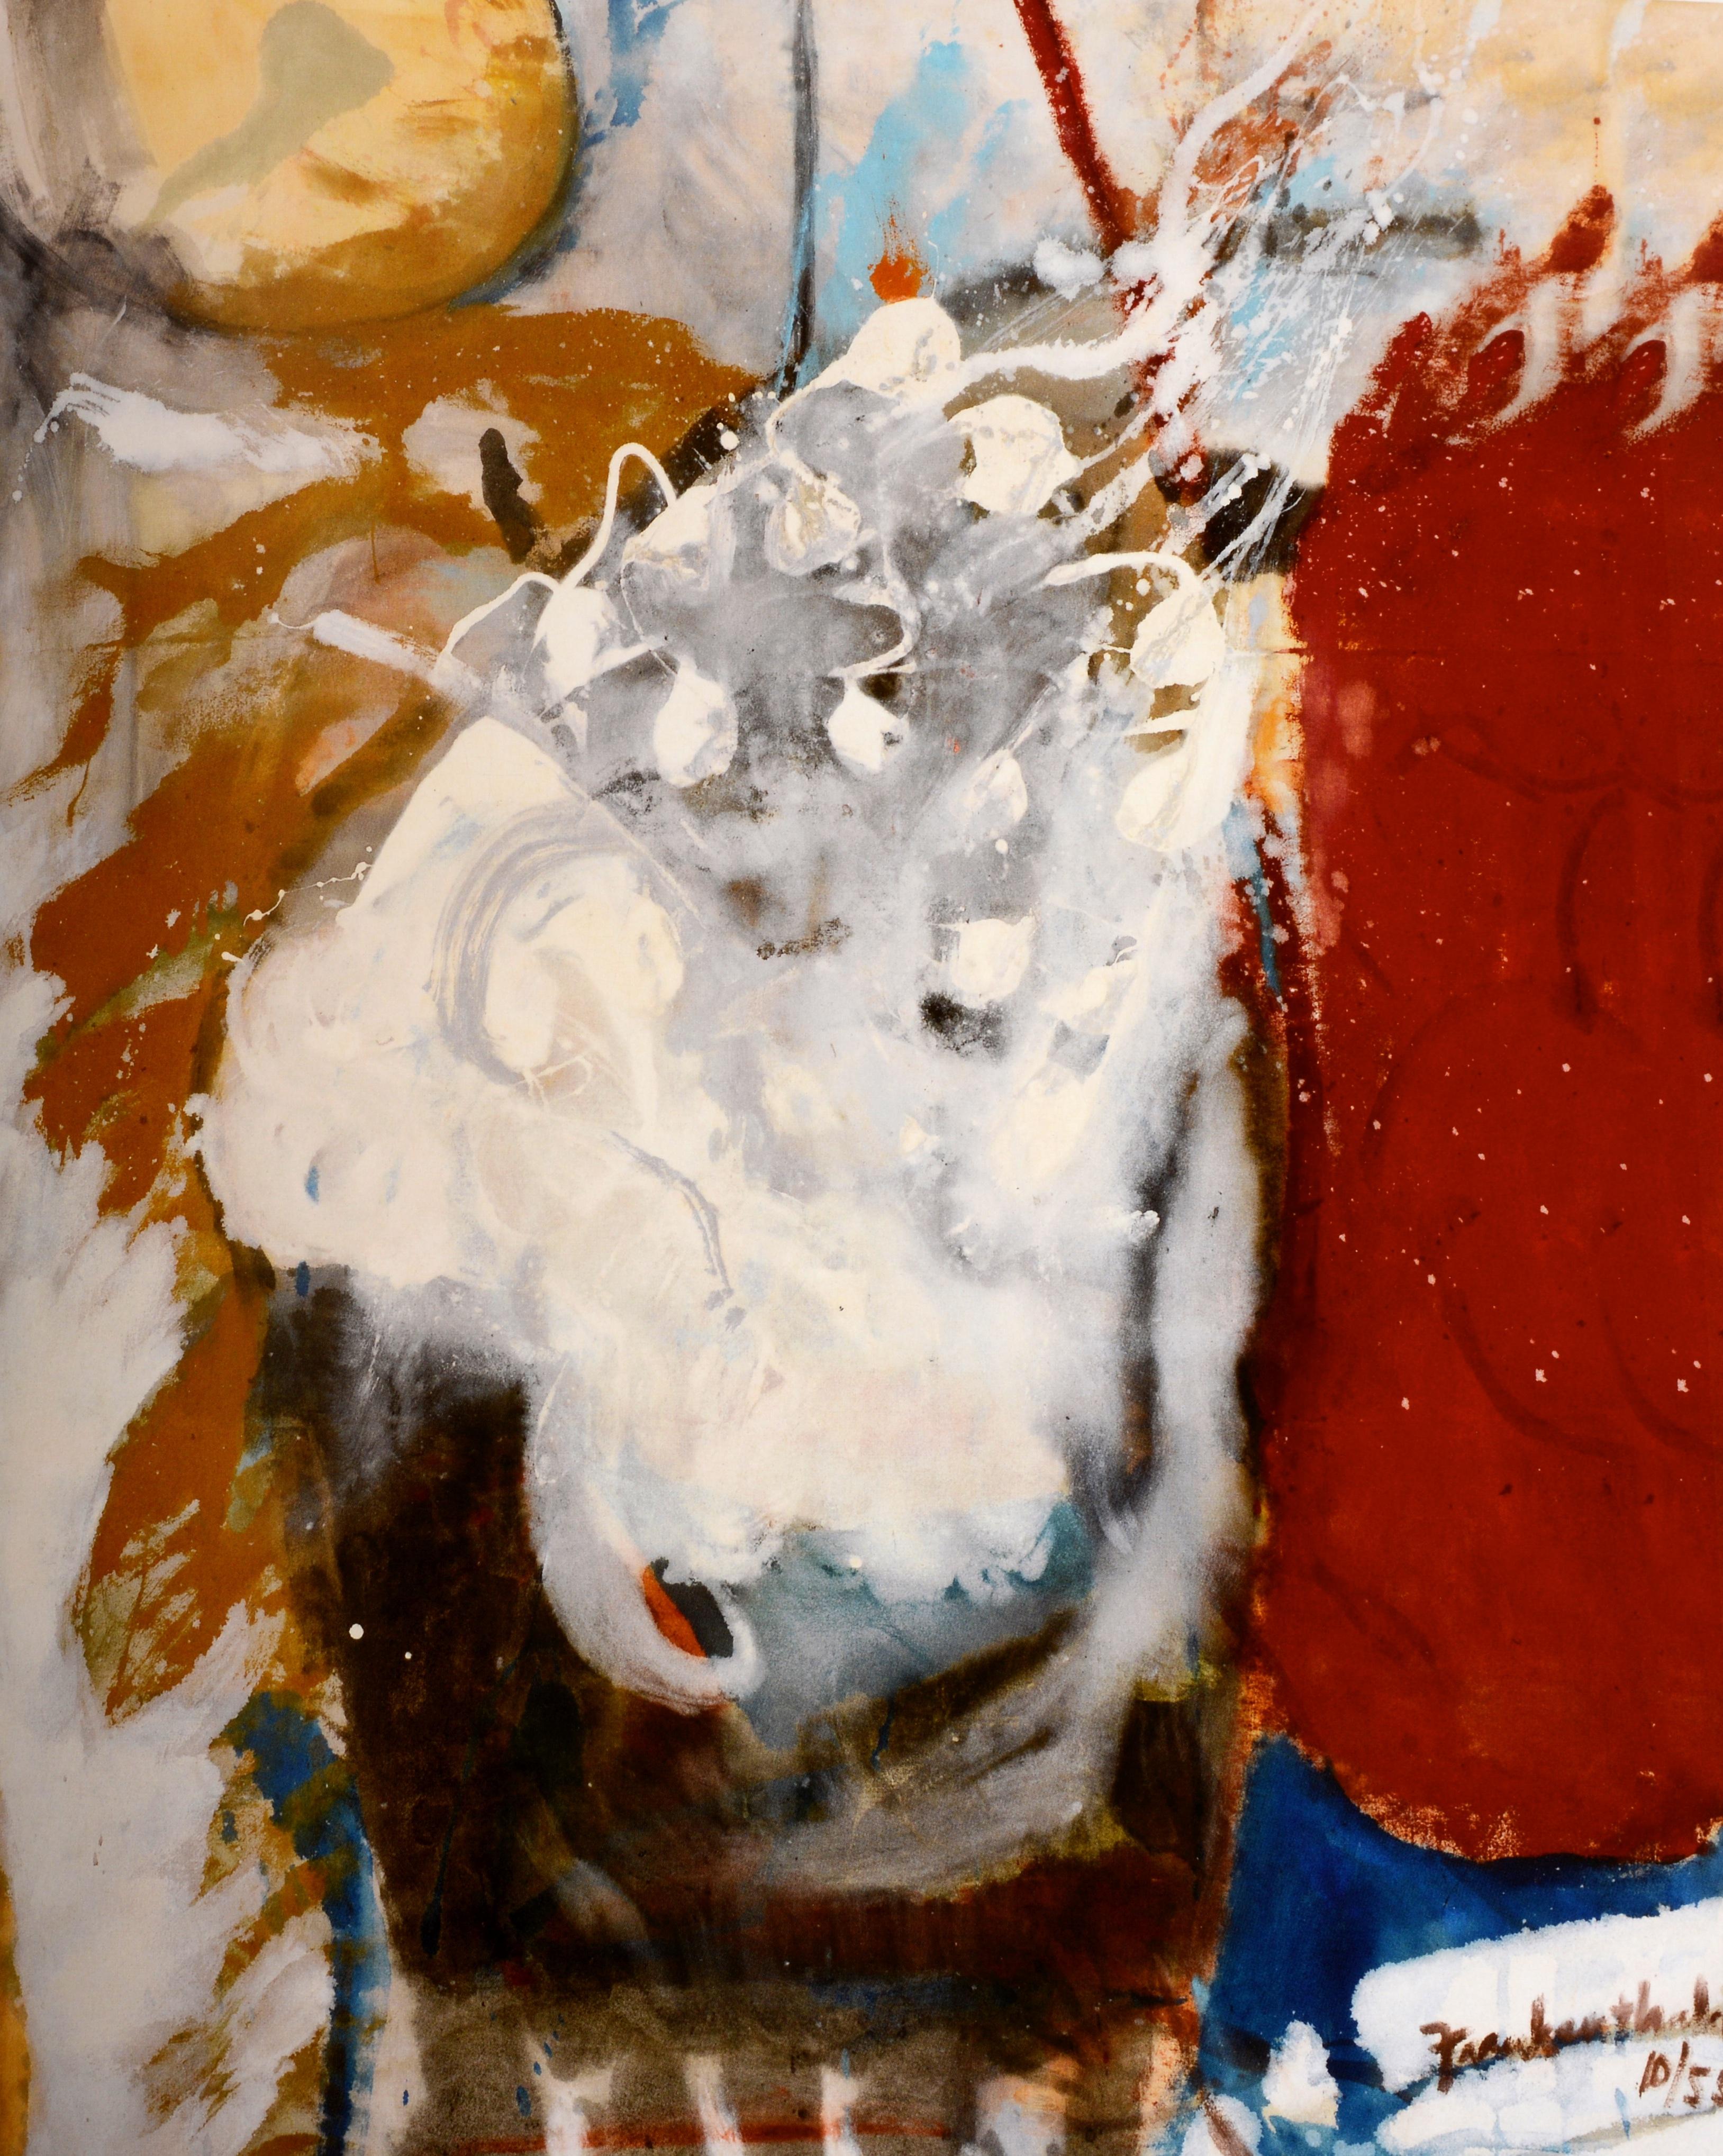 American Painted on 21st St Helen Frankenthaler from 1950-1959 by John Elderfield, 1st Ed For Sale